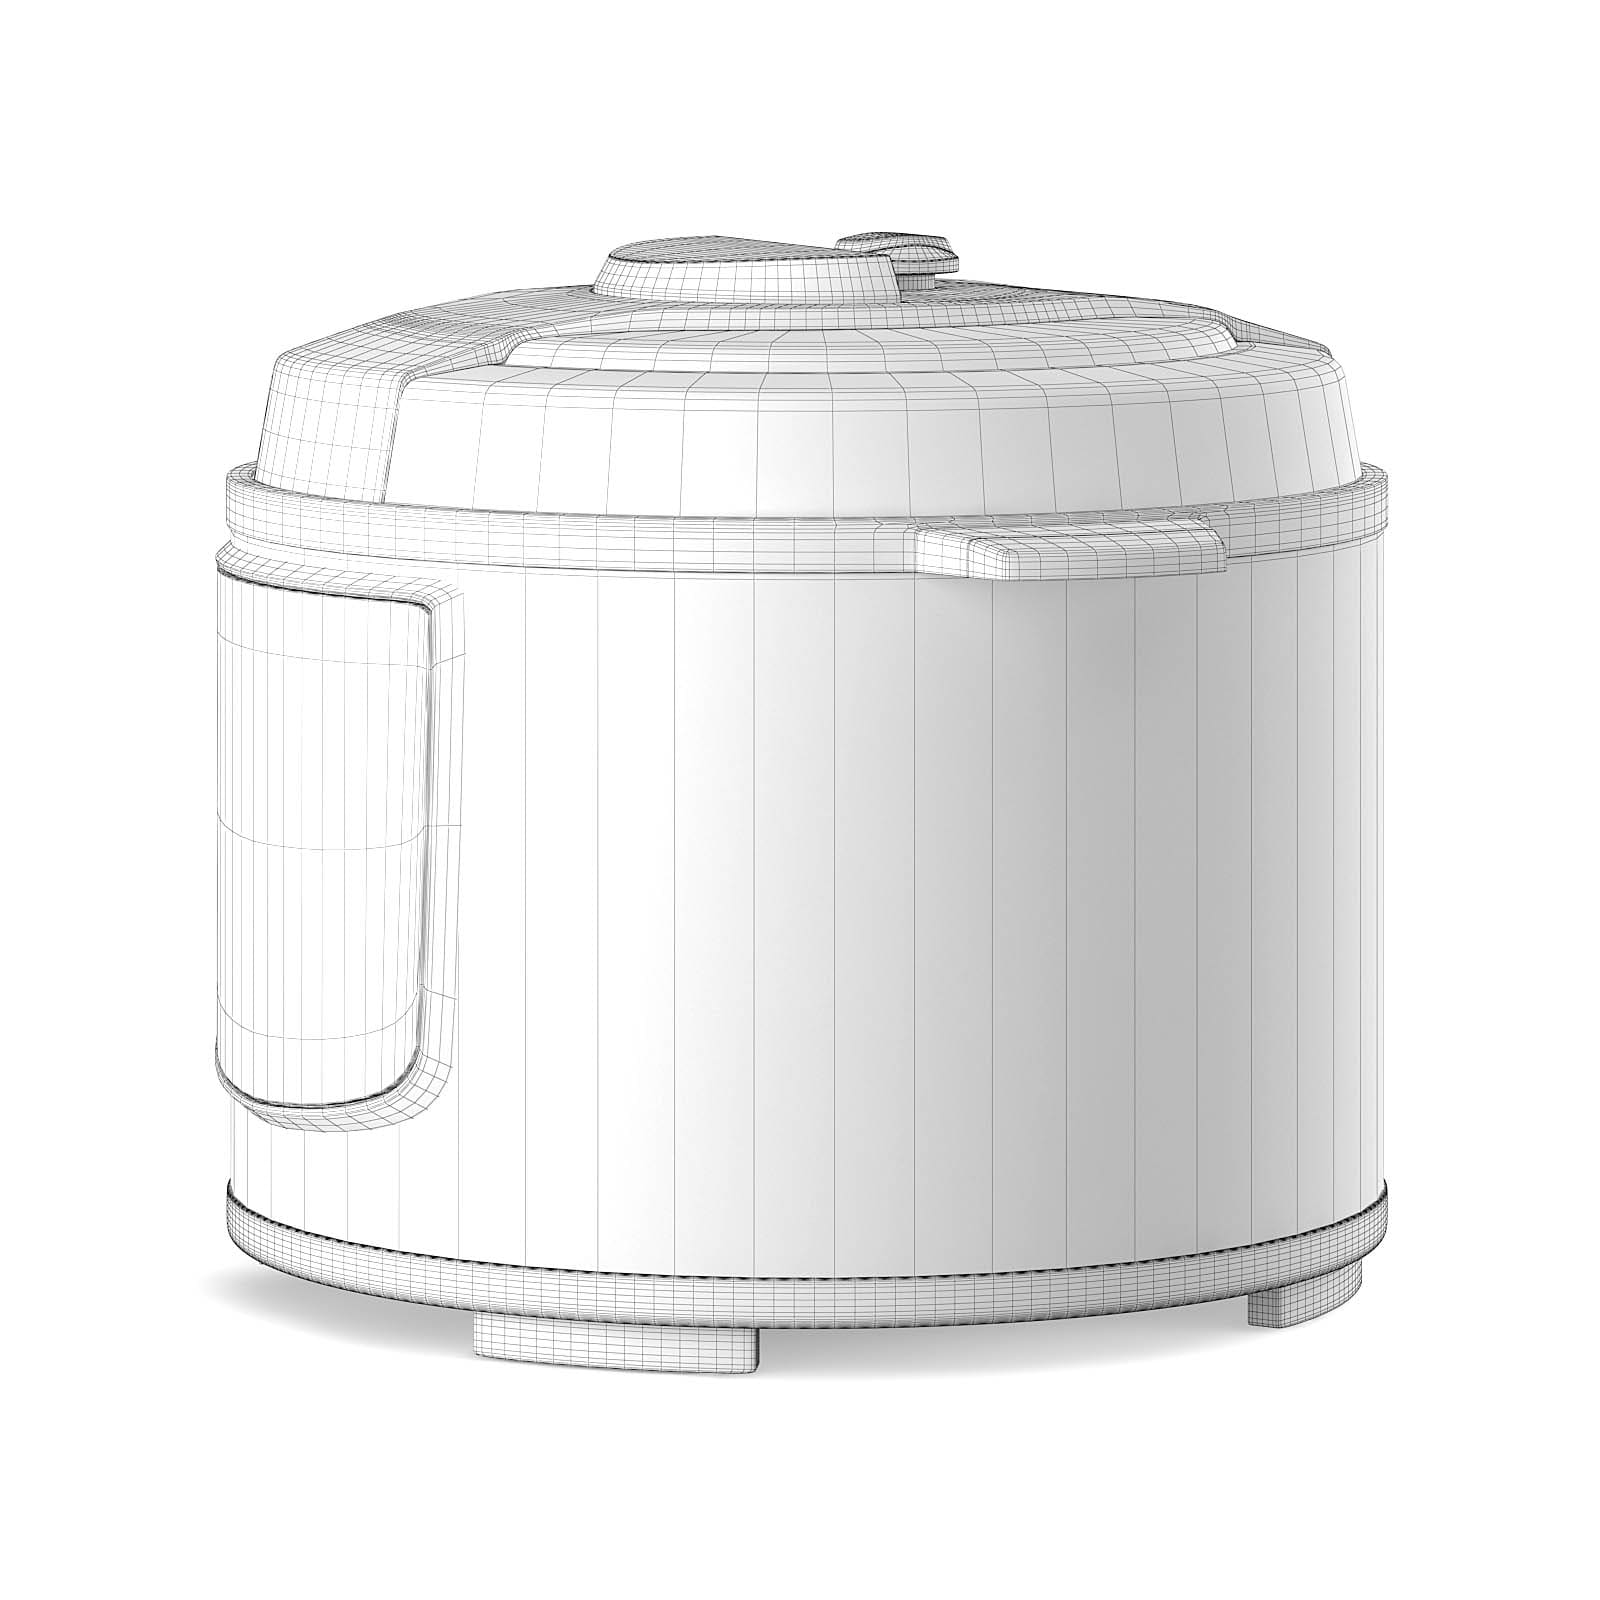 Premium Photo  Xa3d rendering of an extra large pressure cookerxa